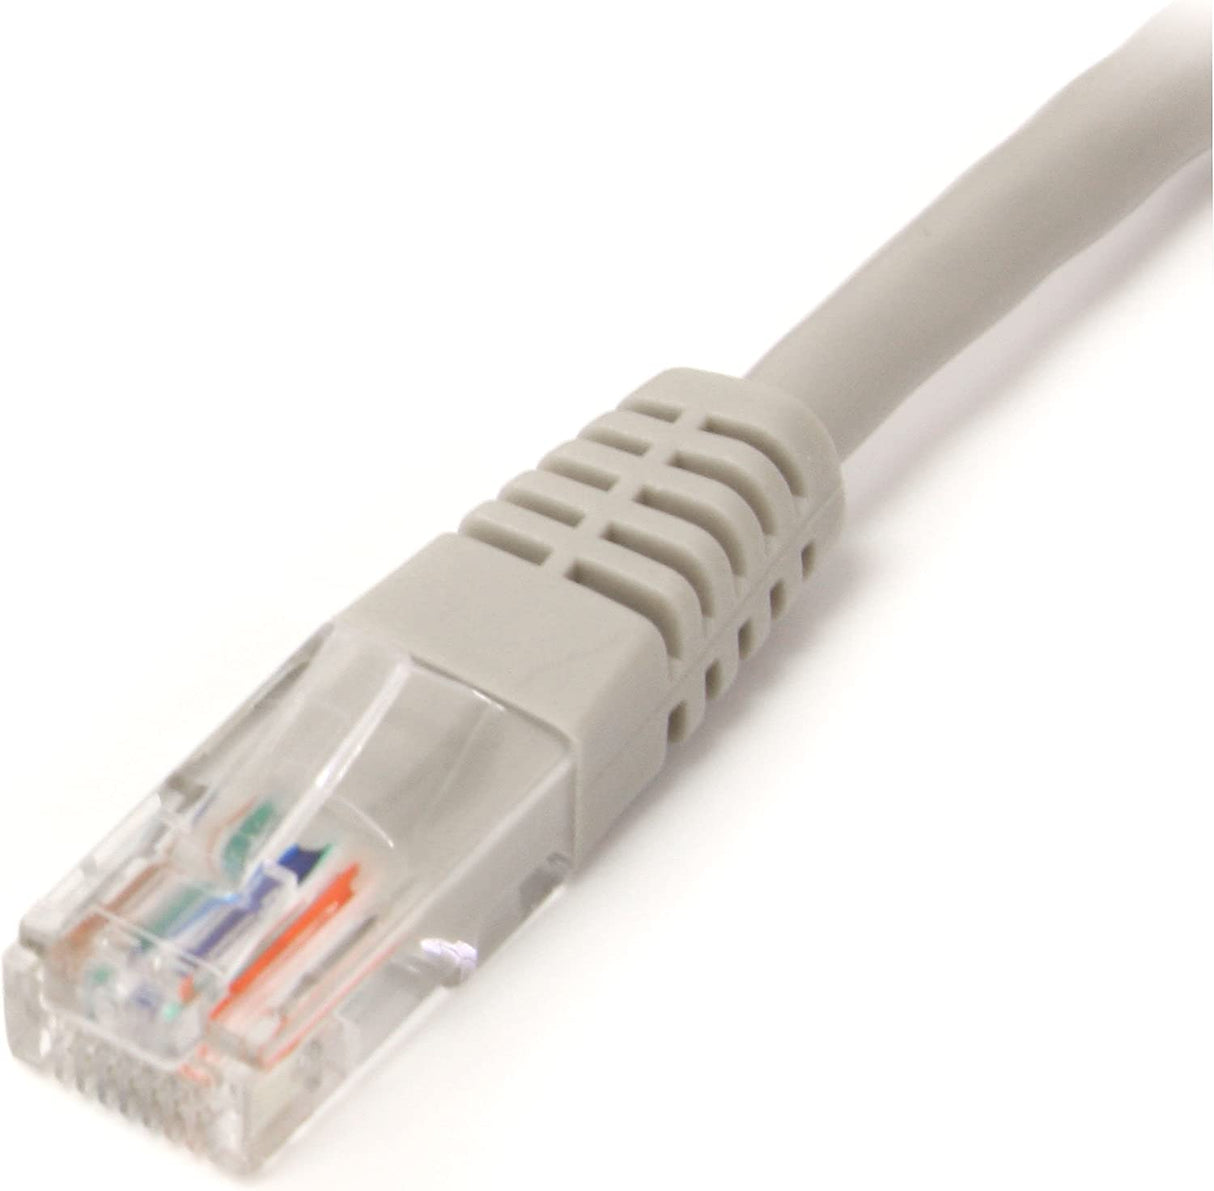 StarTech.com 3 ft Cat5e Patch Cable with Molded RJ45 Connectors - Gray - Cat5e Ethernet Patch Cable - 3ft UTP Cat 5e Patch Cord (M45PATCH3GR) 3 ft / 1m Grey